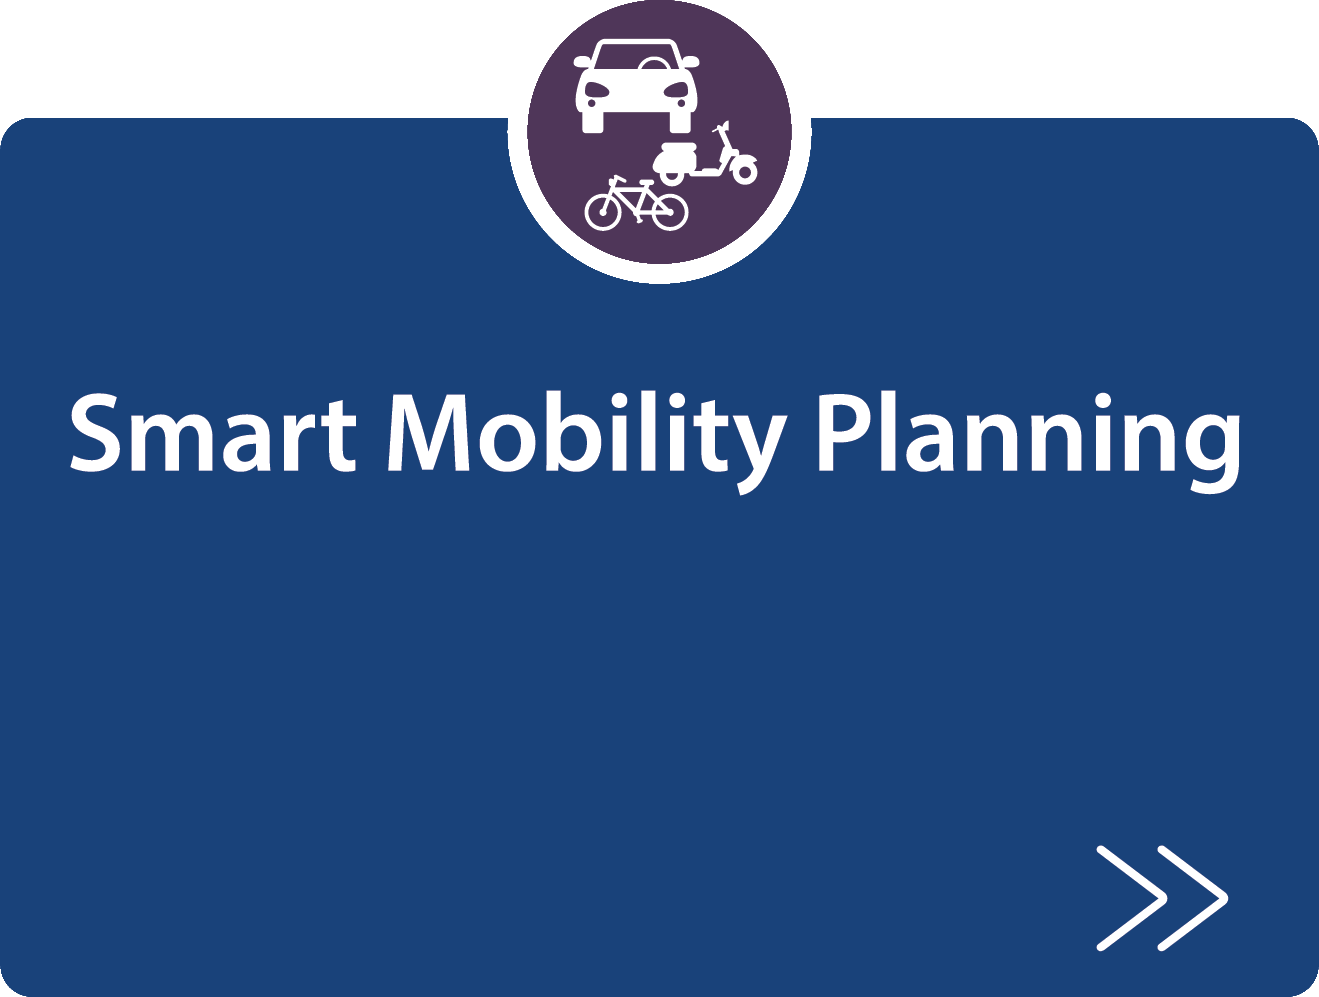 Smart Mobility Planning strategy description 